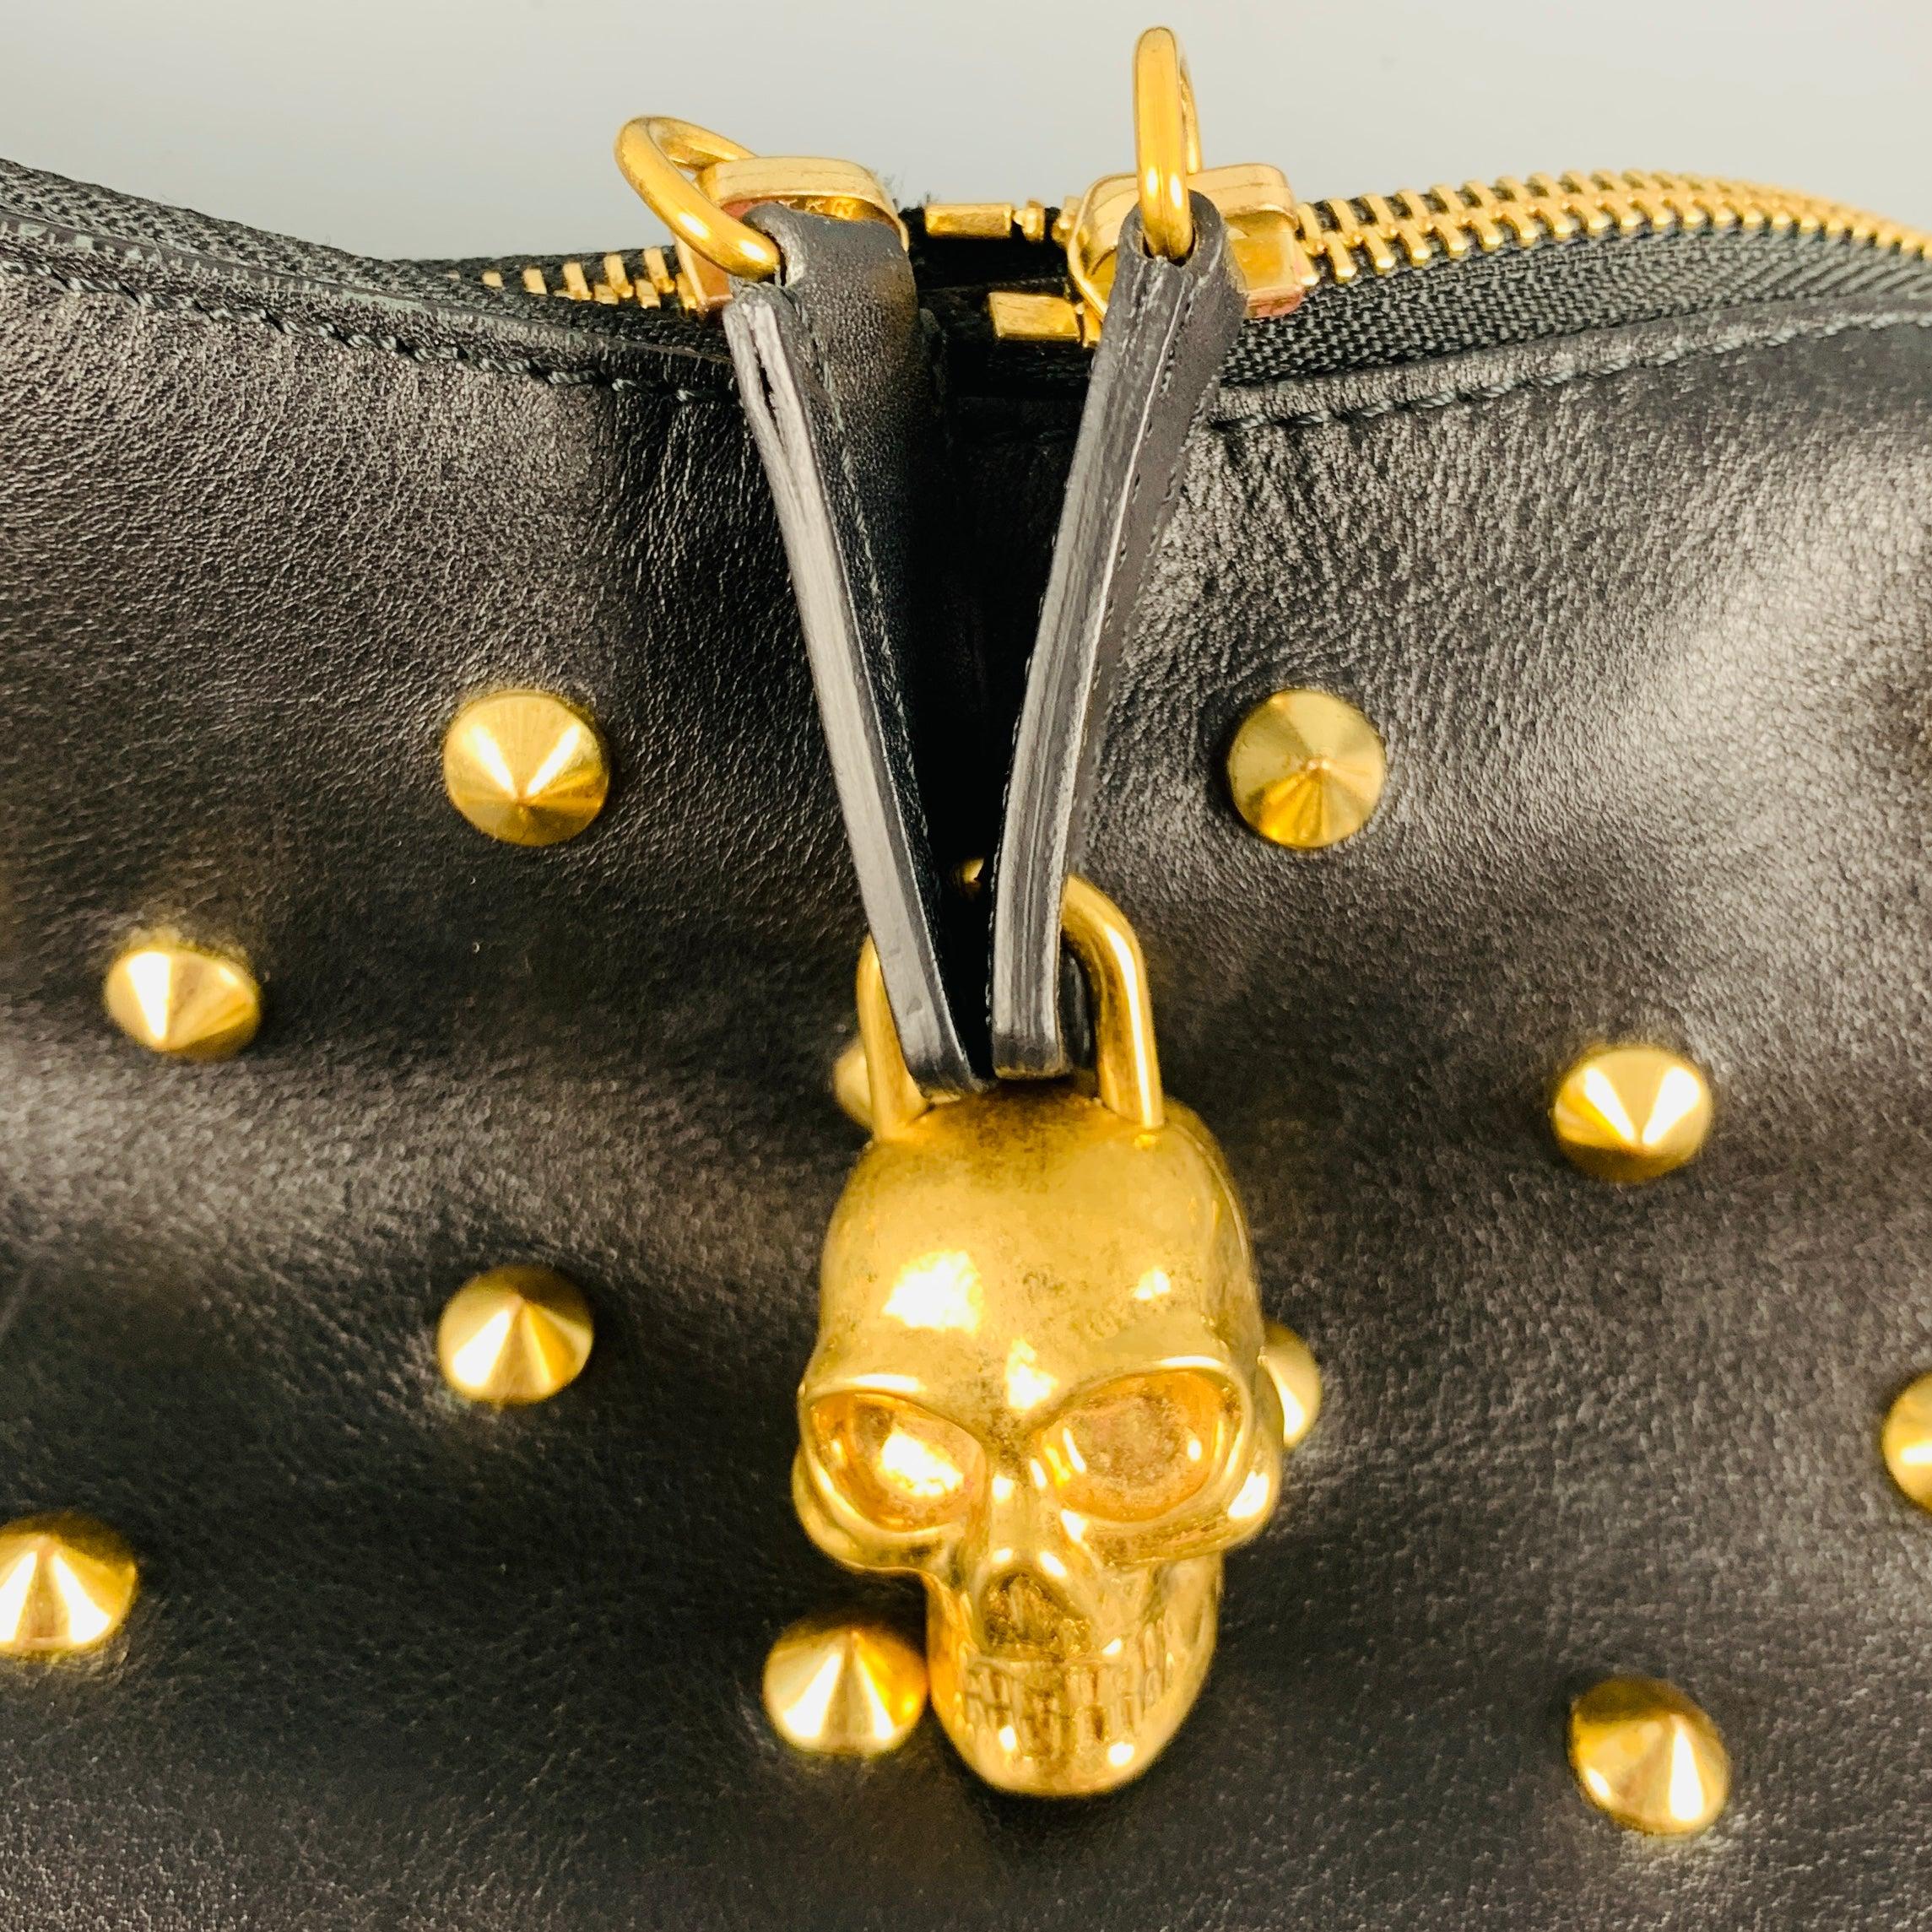 ALEXANDER MCQUEEN Black Gold Studded Leather Hobo Handbag 4